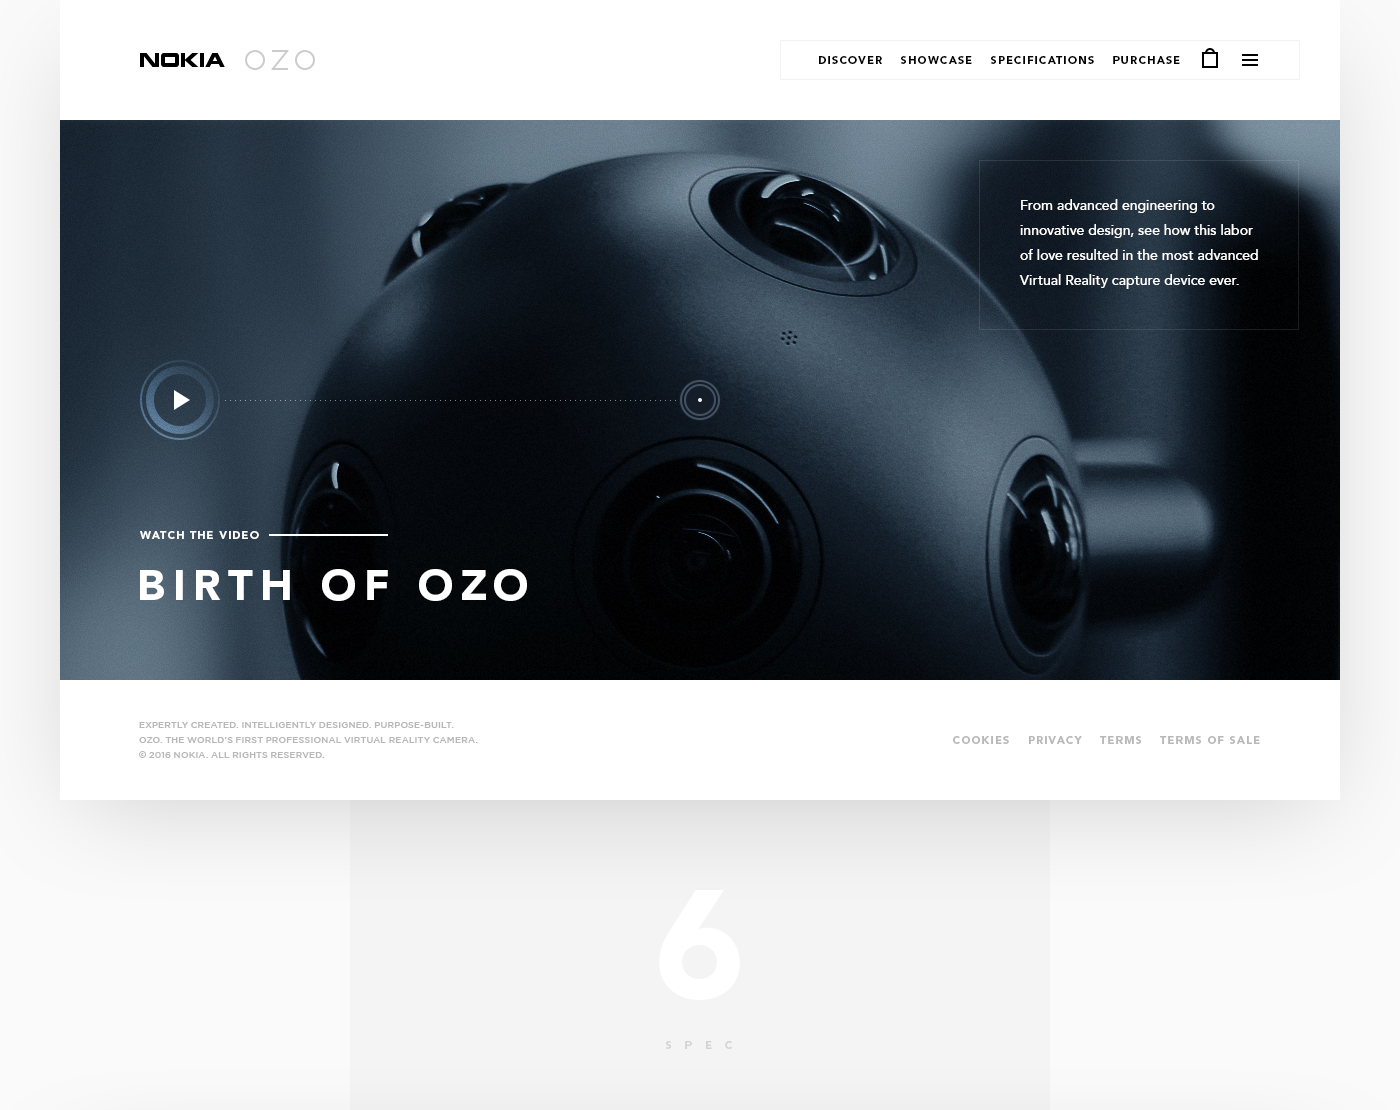 Web Design and Visual Design for Nokia OZO 